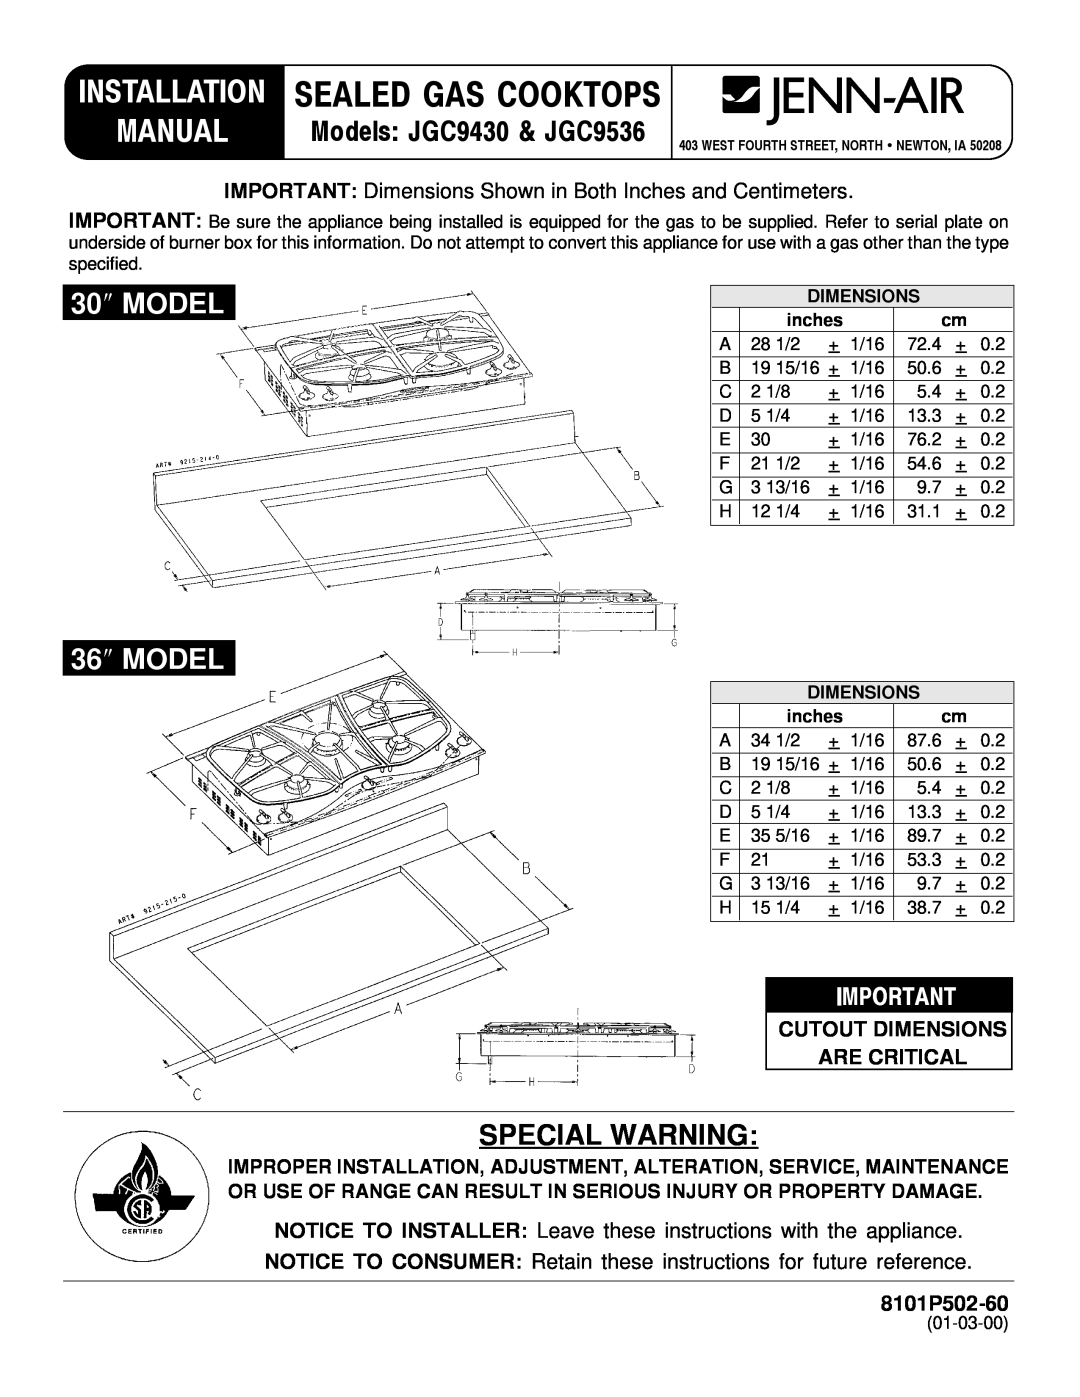 Jenn-Air JGC9536 installation manual Manual, Sealed Gas Cooktops, Installation, Model, Special Warning, 8101P502-60 